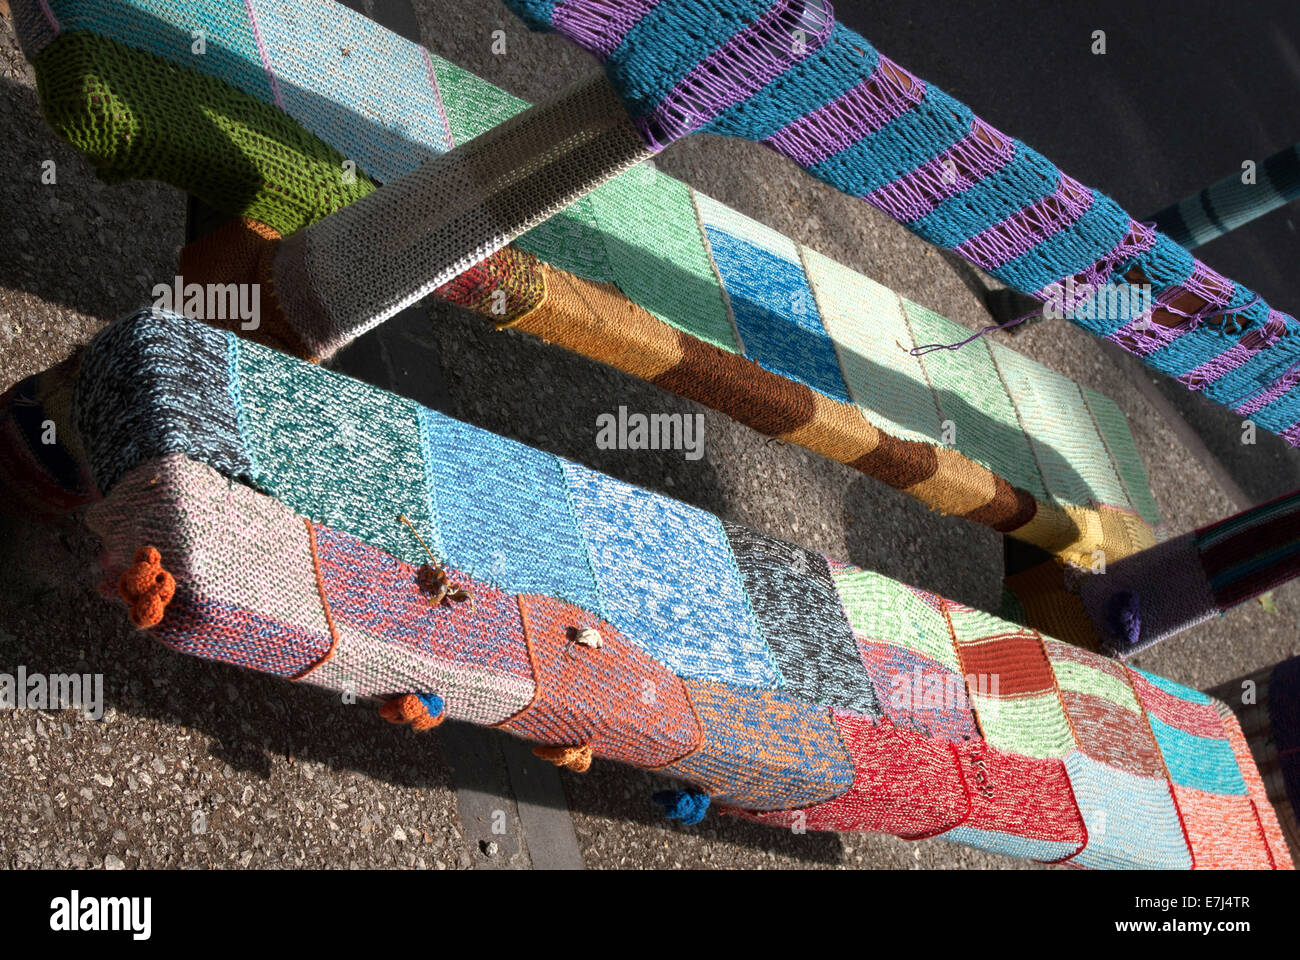 Urban Knitting in Cahors / Yarnbombing Stock Photo